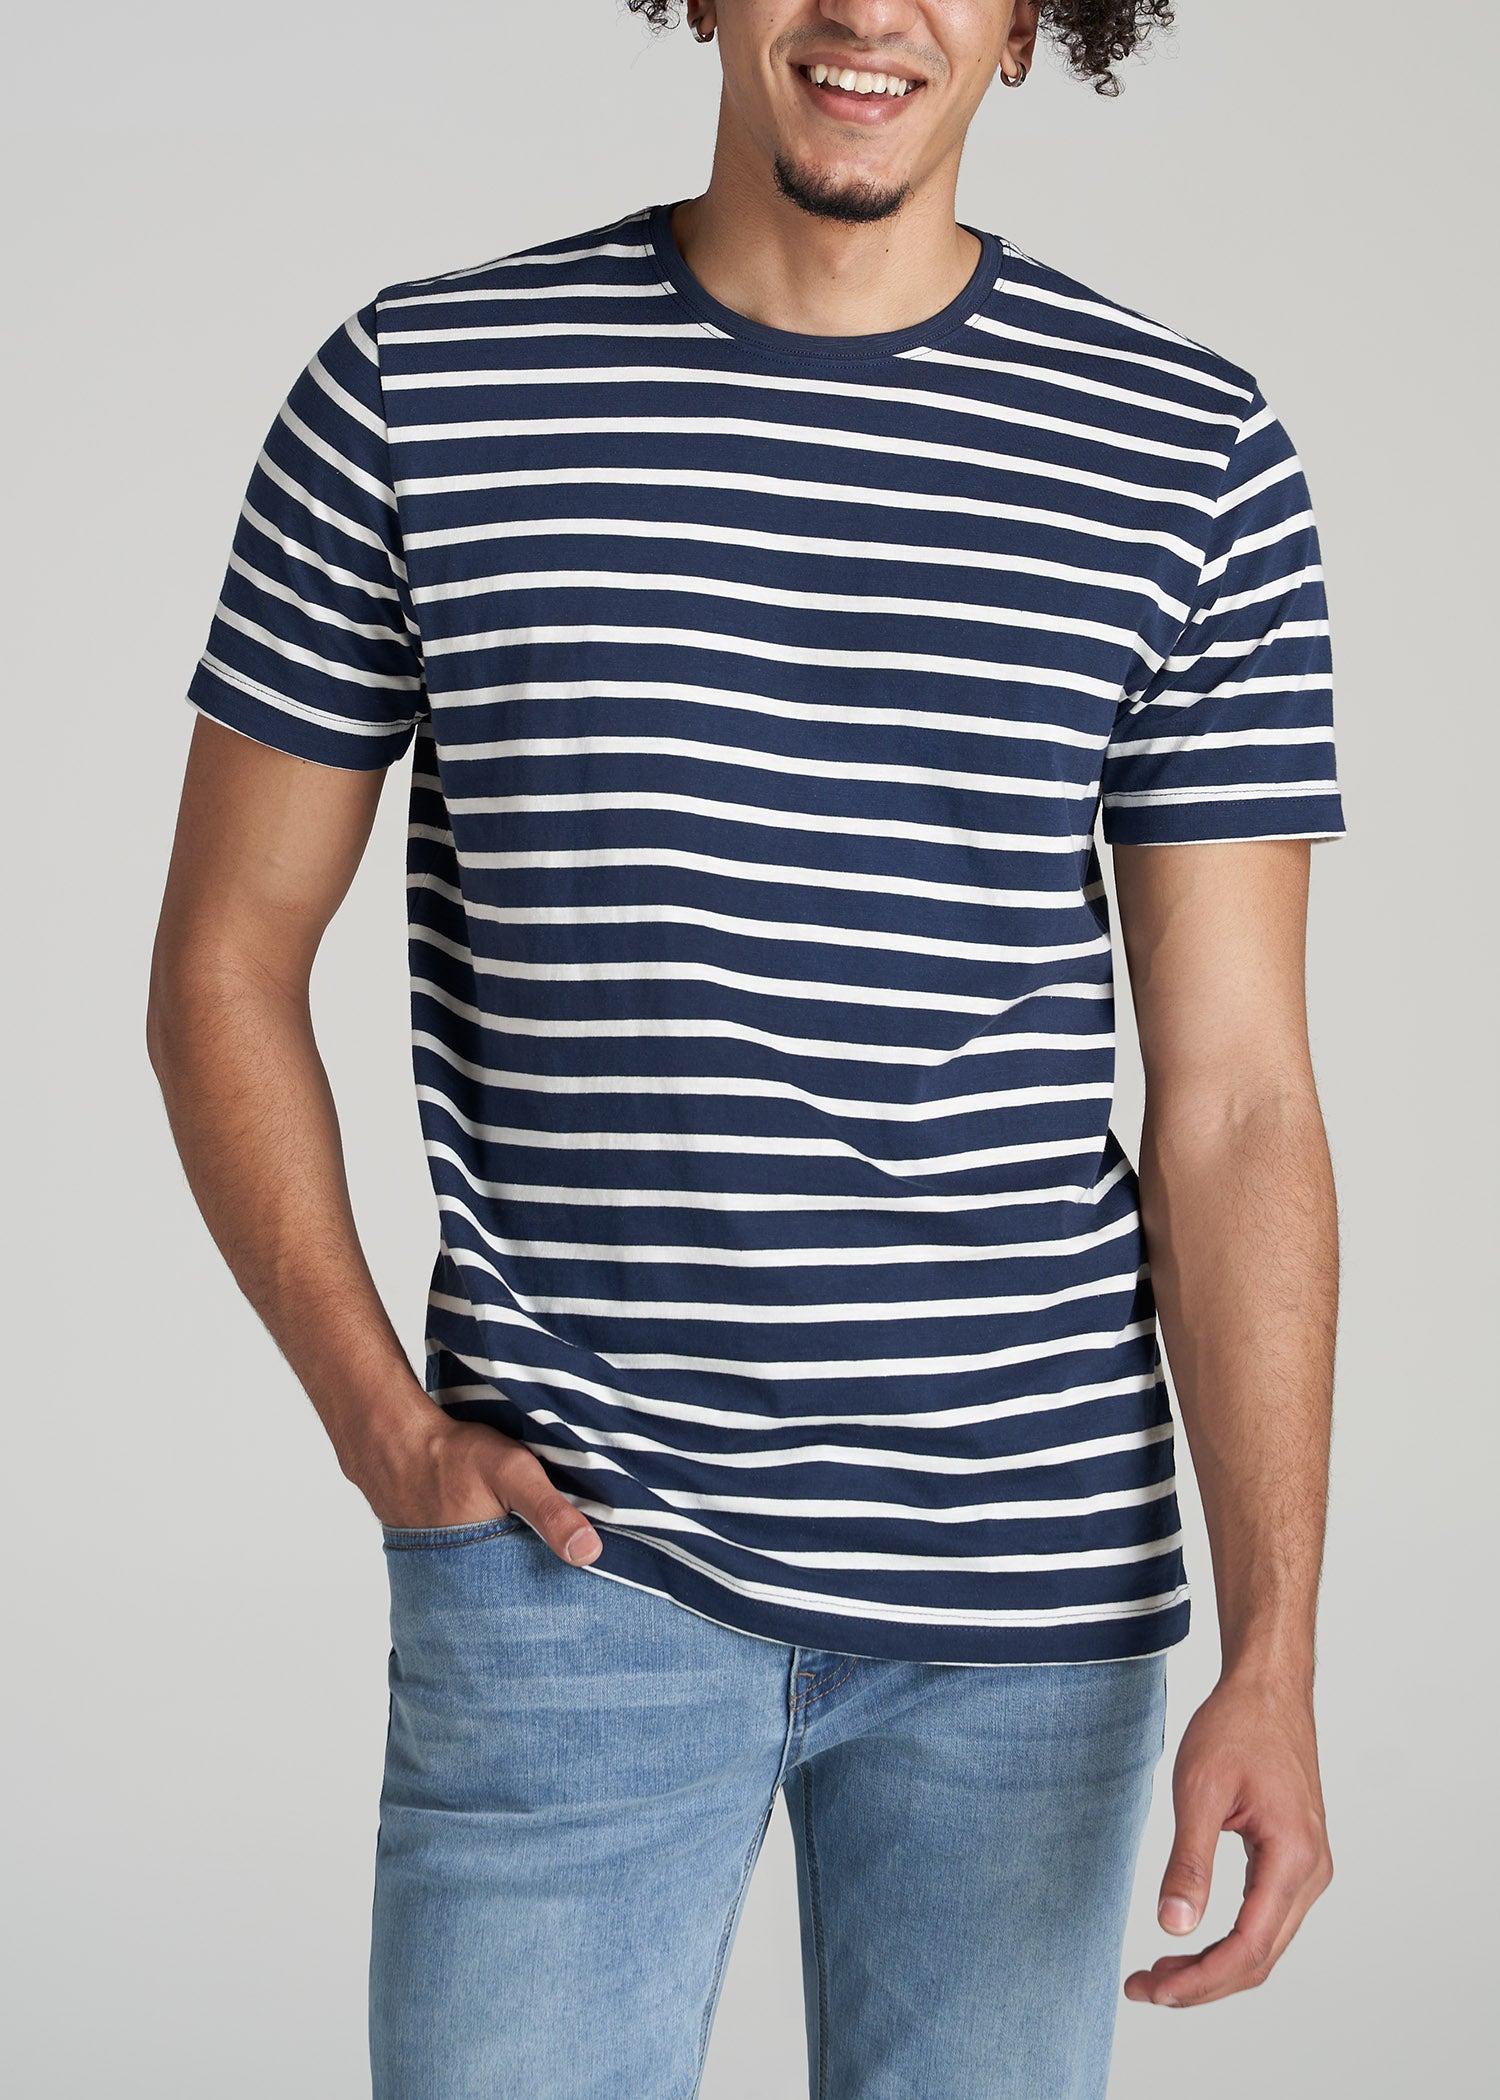 Striped T Shirt Men\'s: Tall Navy & White Striped Tee | American Tall